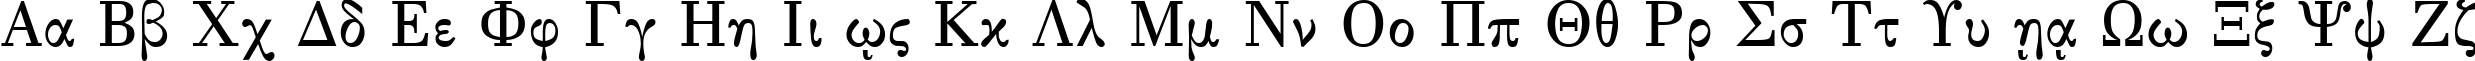 Пример написания английского алфавита шрифтом Greek serge1 normal